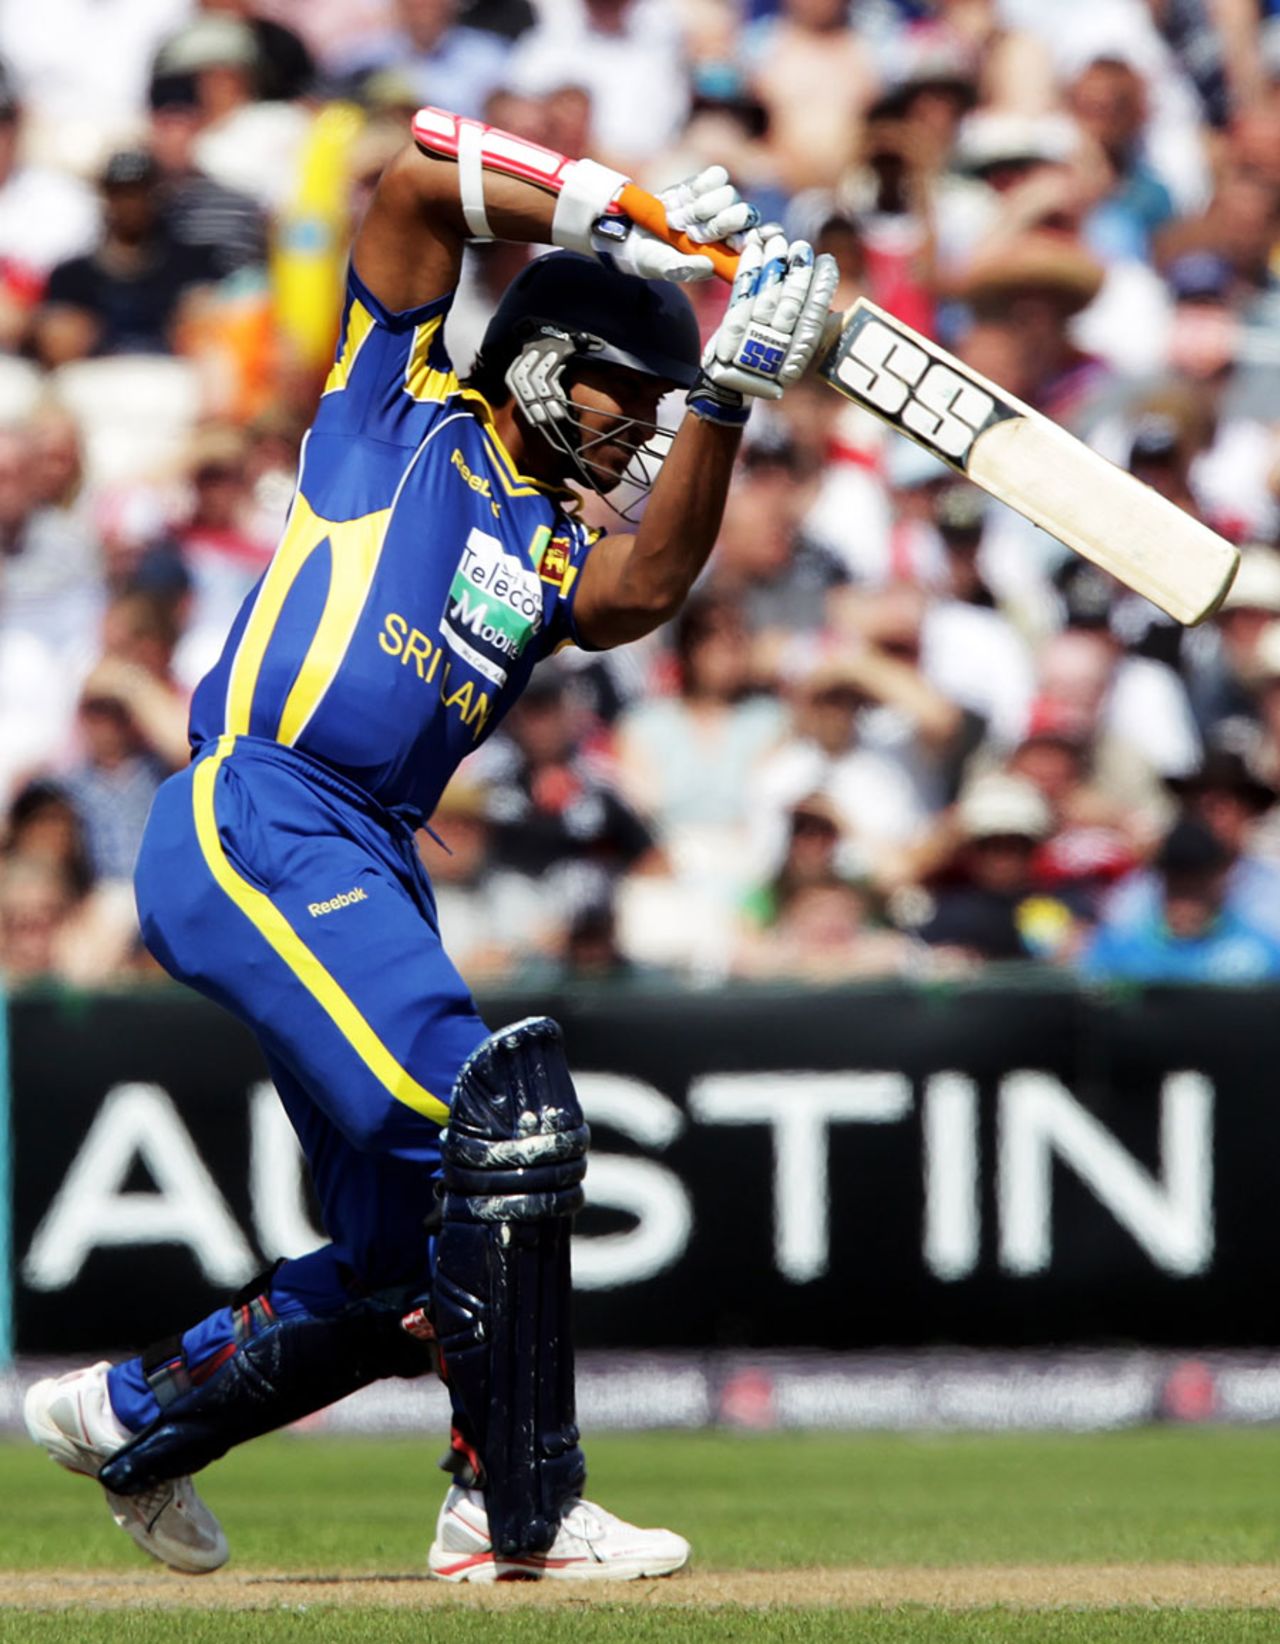 Kumar Sangakkara steadied Sri Lanka's innings, England v Sri Lanka, 5th ODI, Old Trafford, July 9 2011